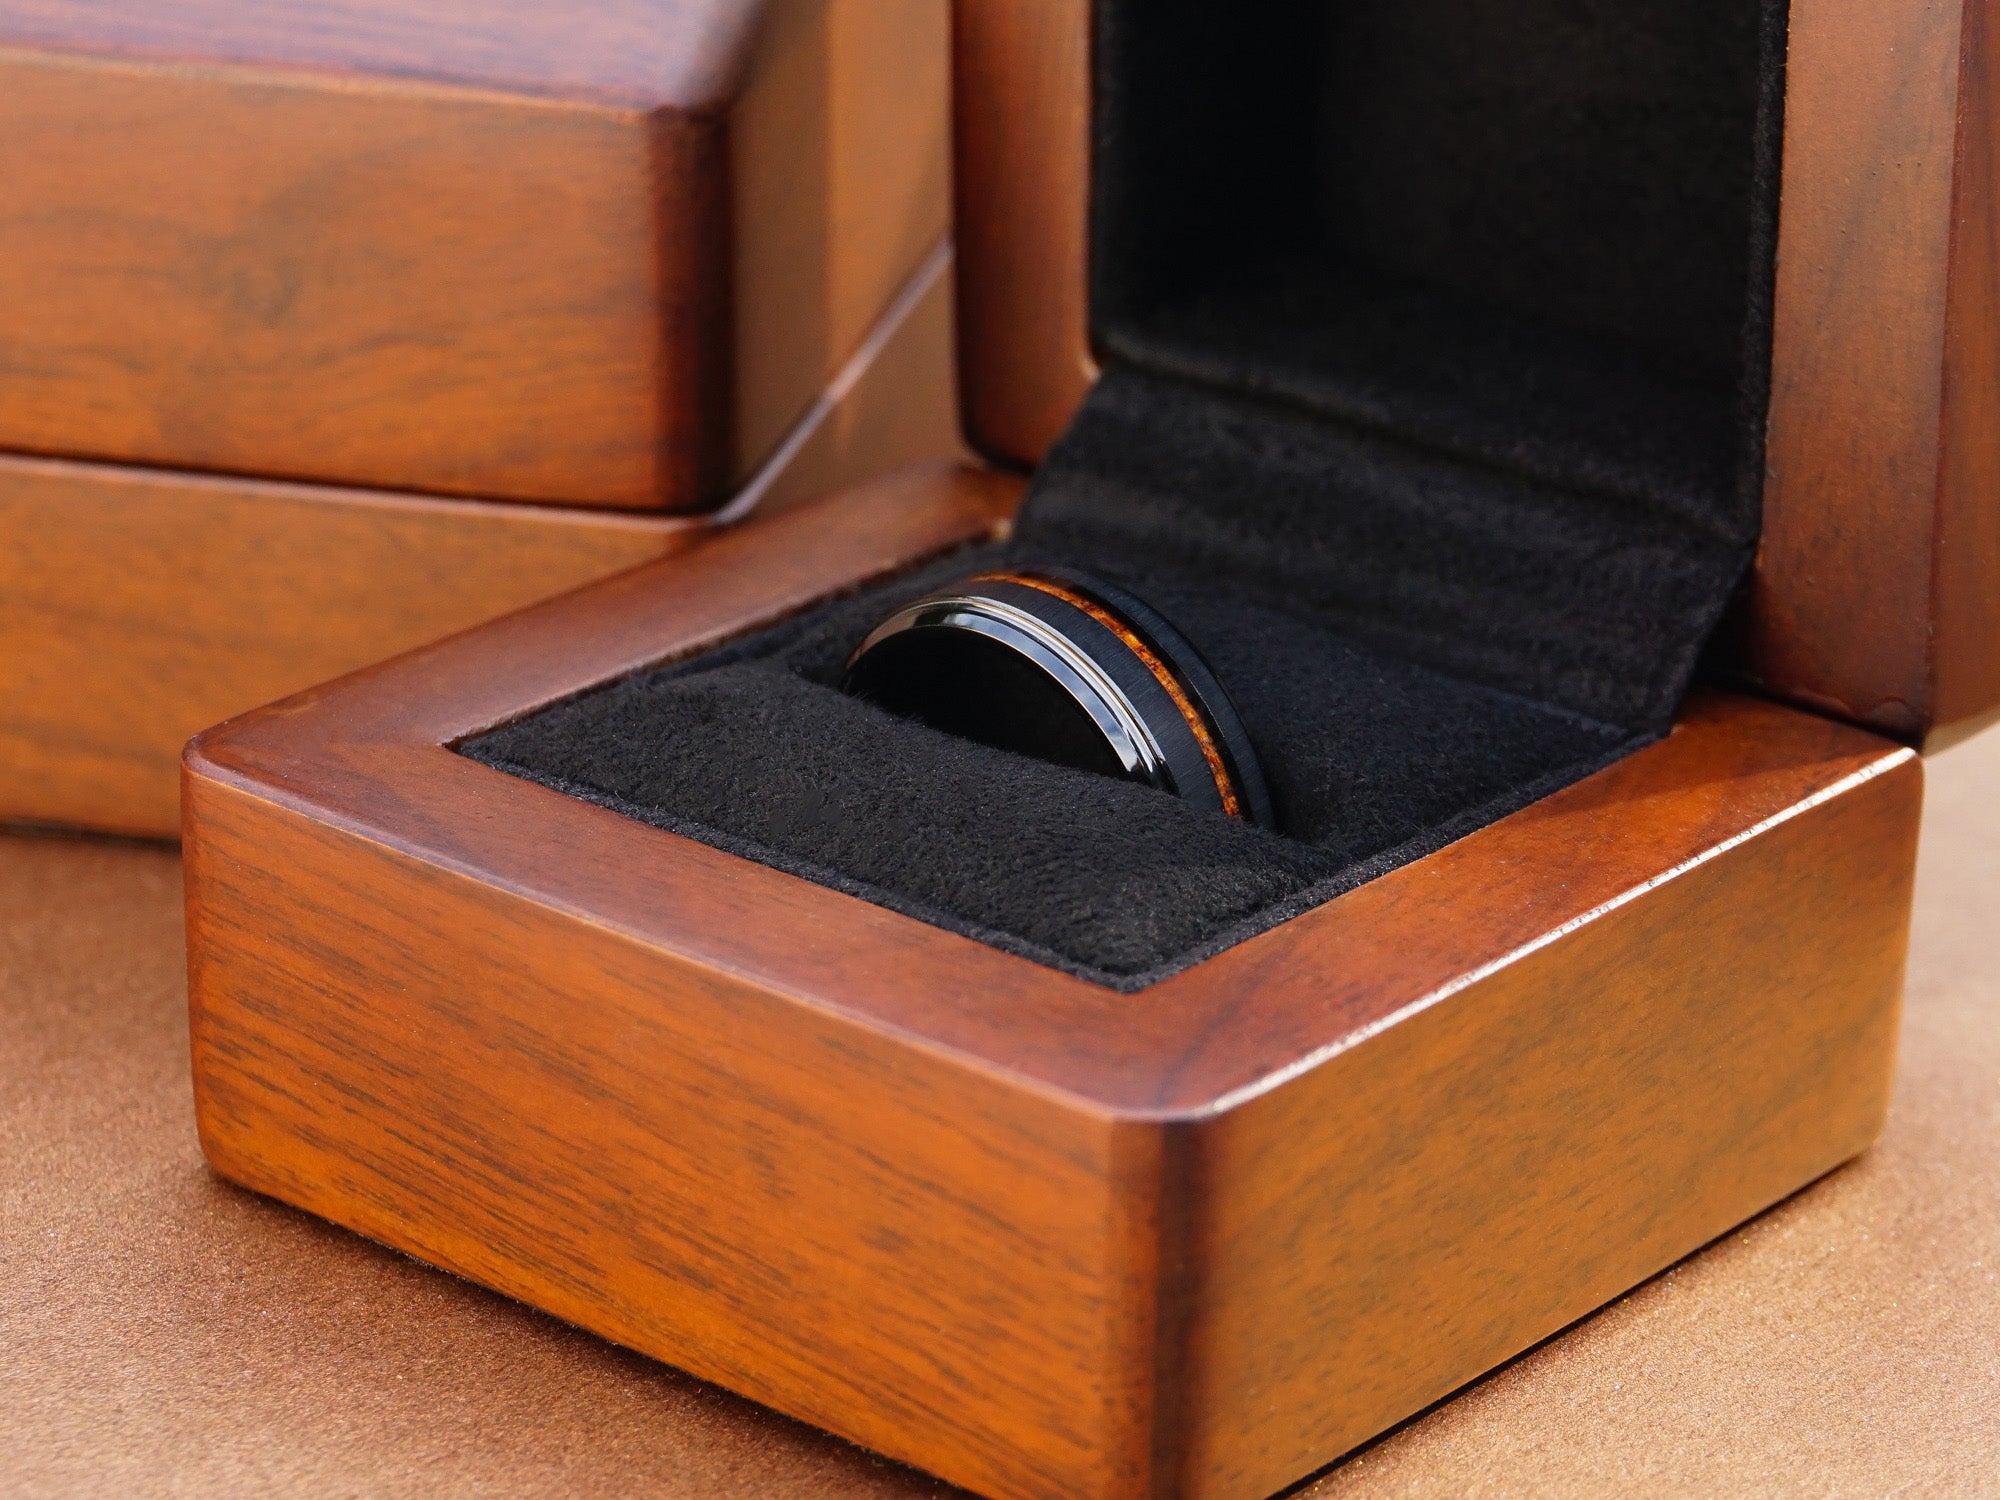 aloha tungsten ring, black brushed matte 8mm ring with koa wood acacia inlay, mens wedding band, luxury wood ring box